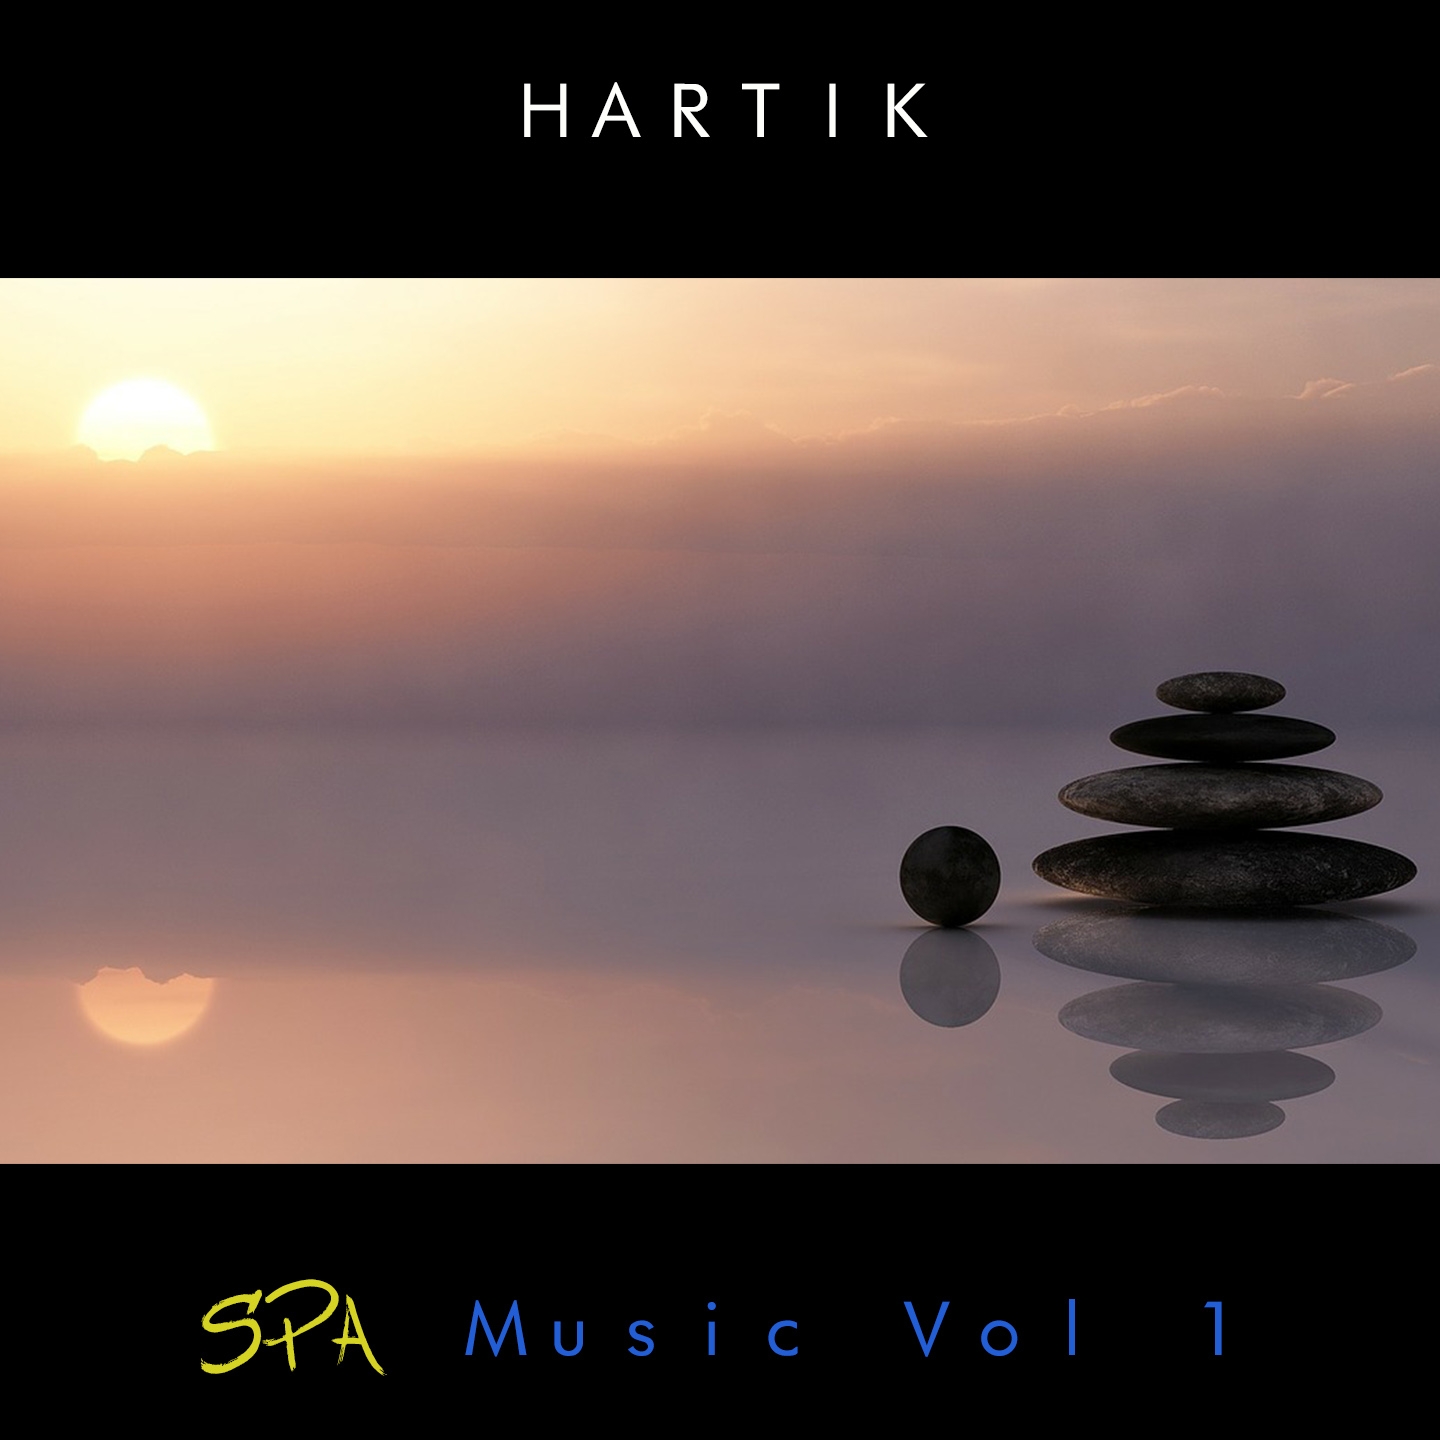 SPA music (Vol 1)